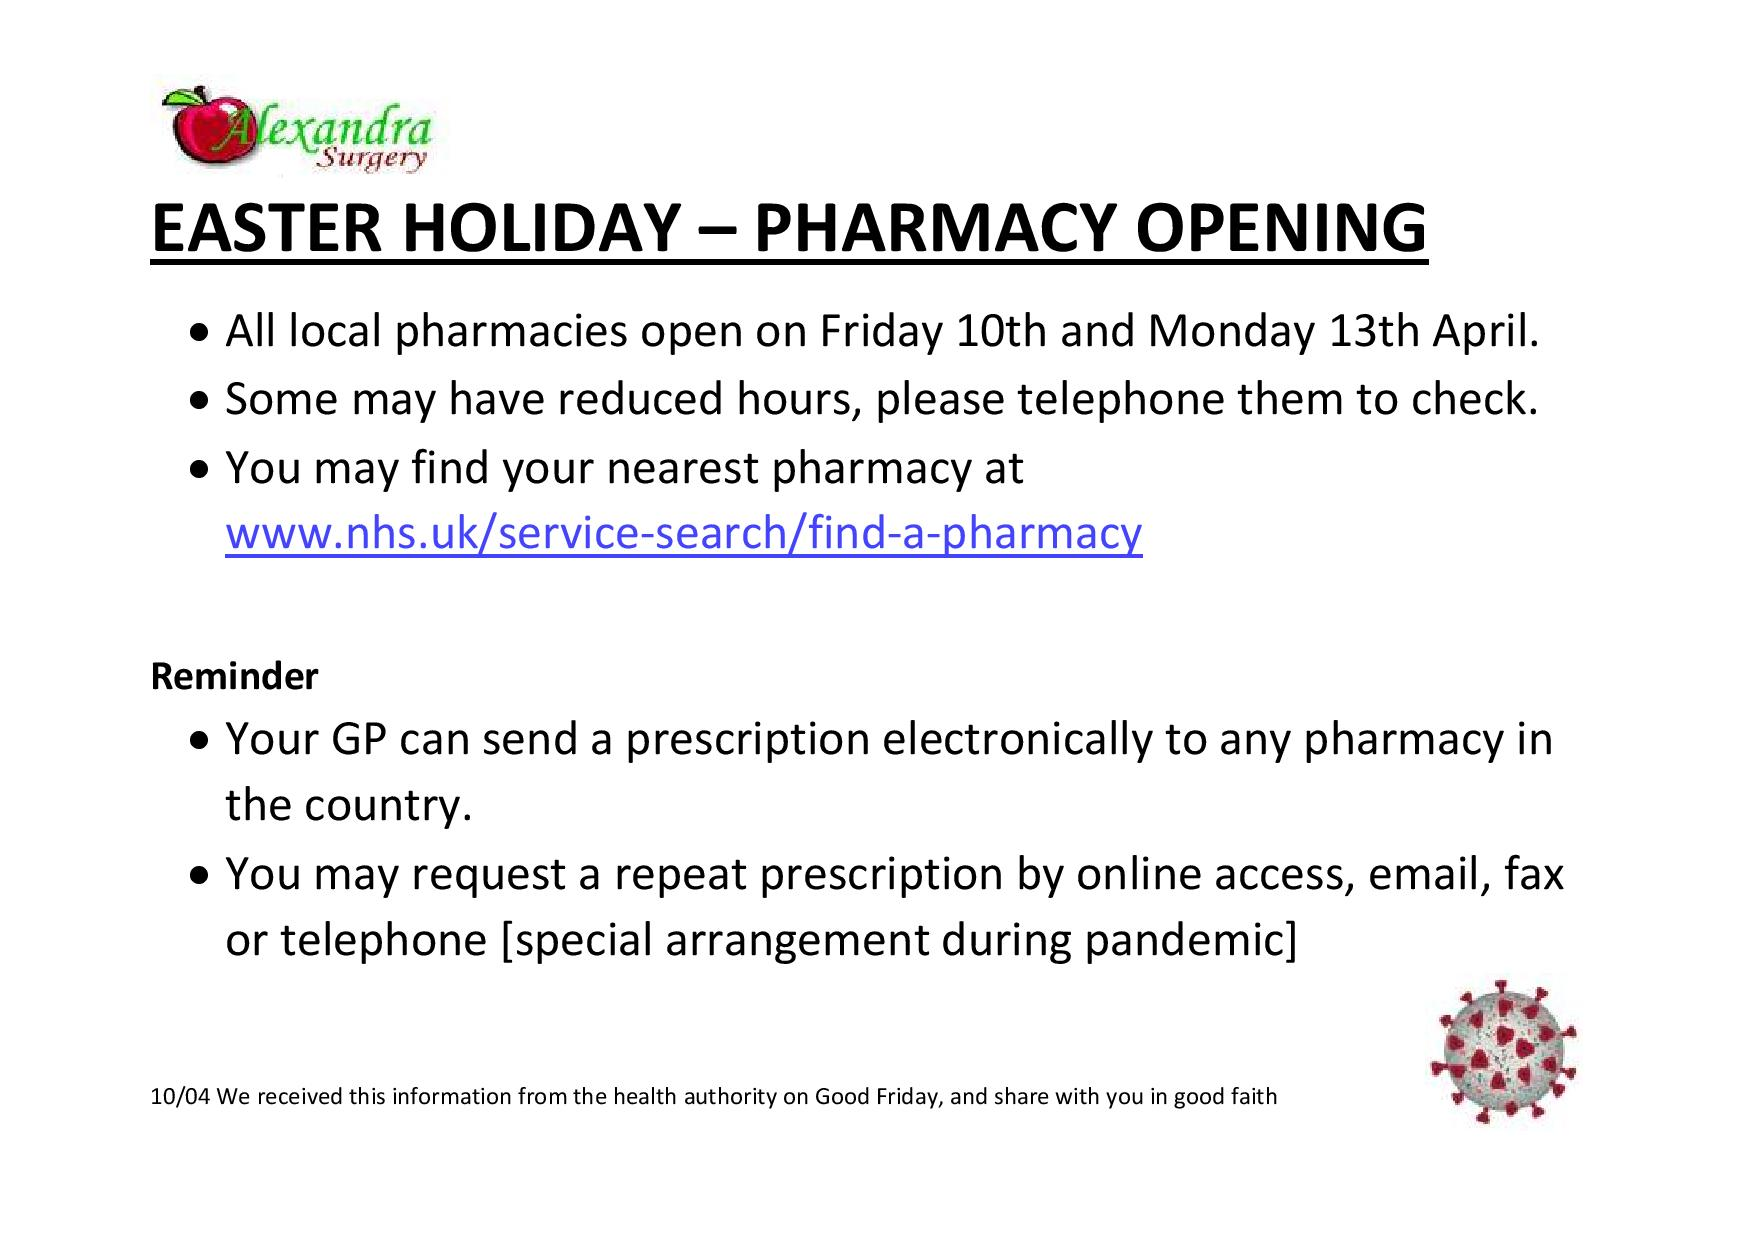 Easter pharmacy opening hours